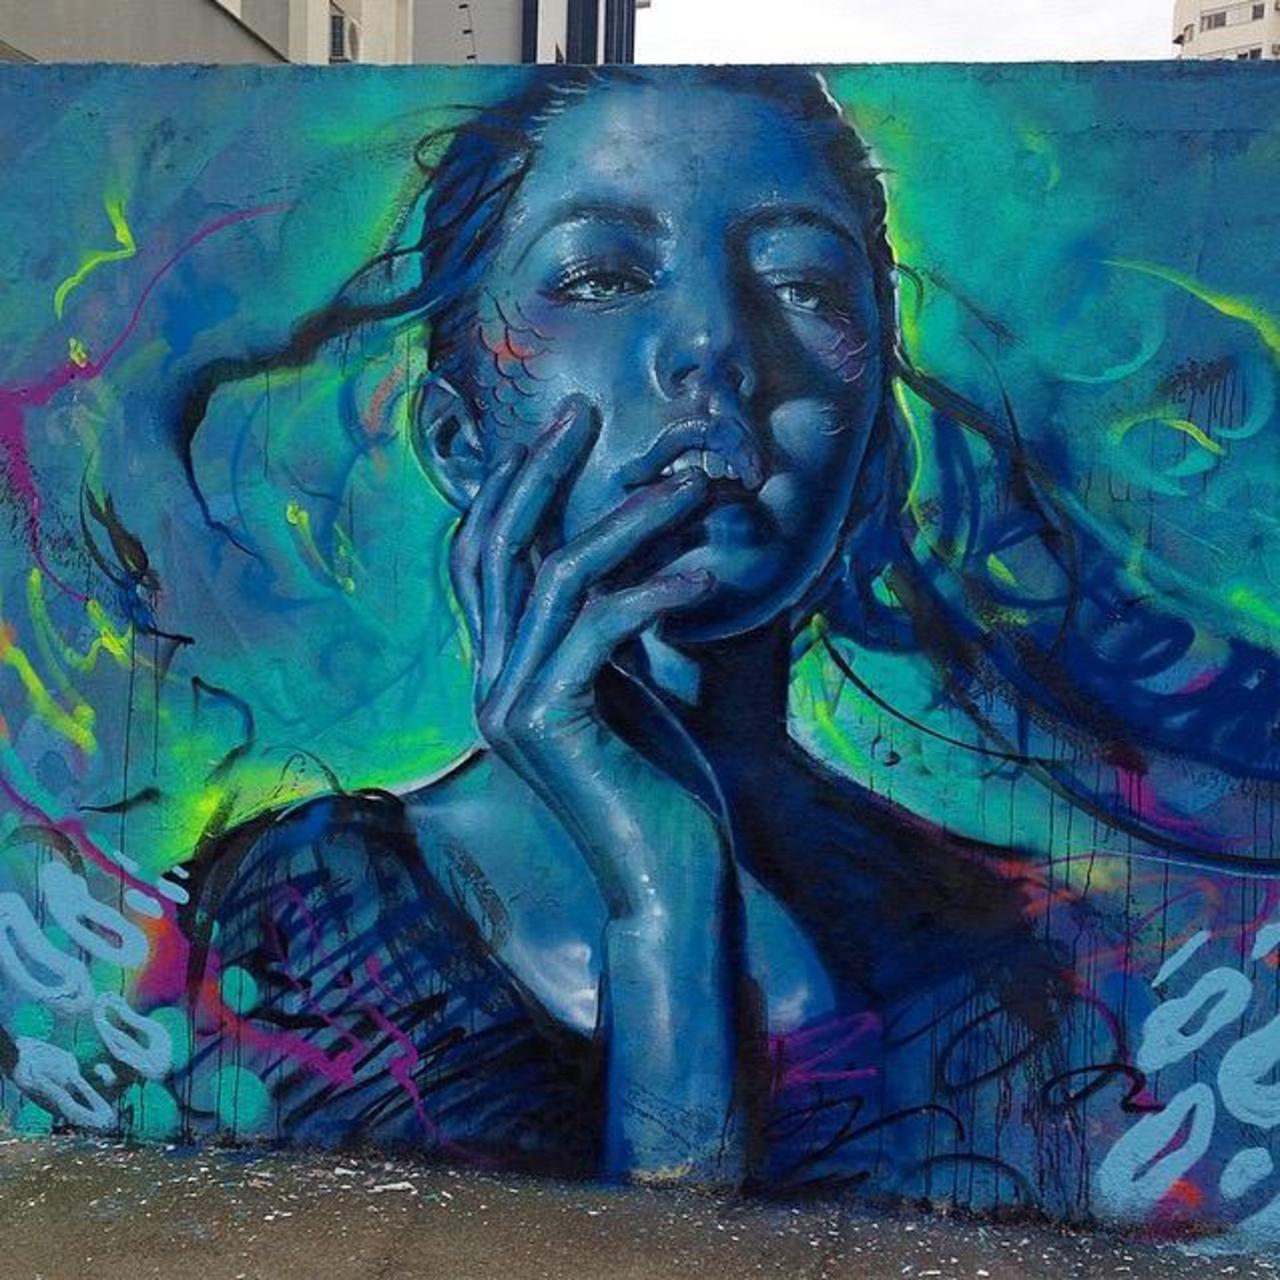 Thiago Valdi new Street Art piece titled 'Day Dreamer'

#art #mural #graffiti #streetart http://t.co/rSnUD6irDS